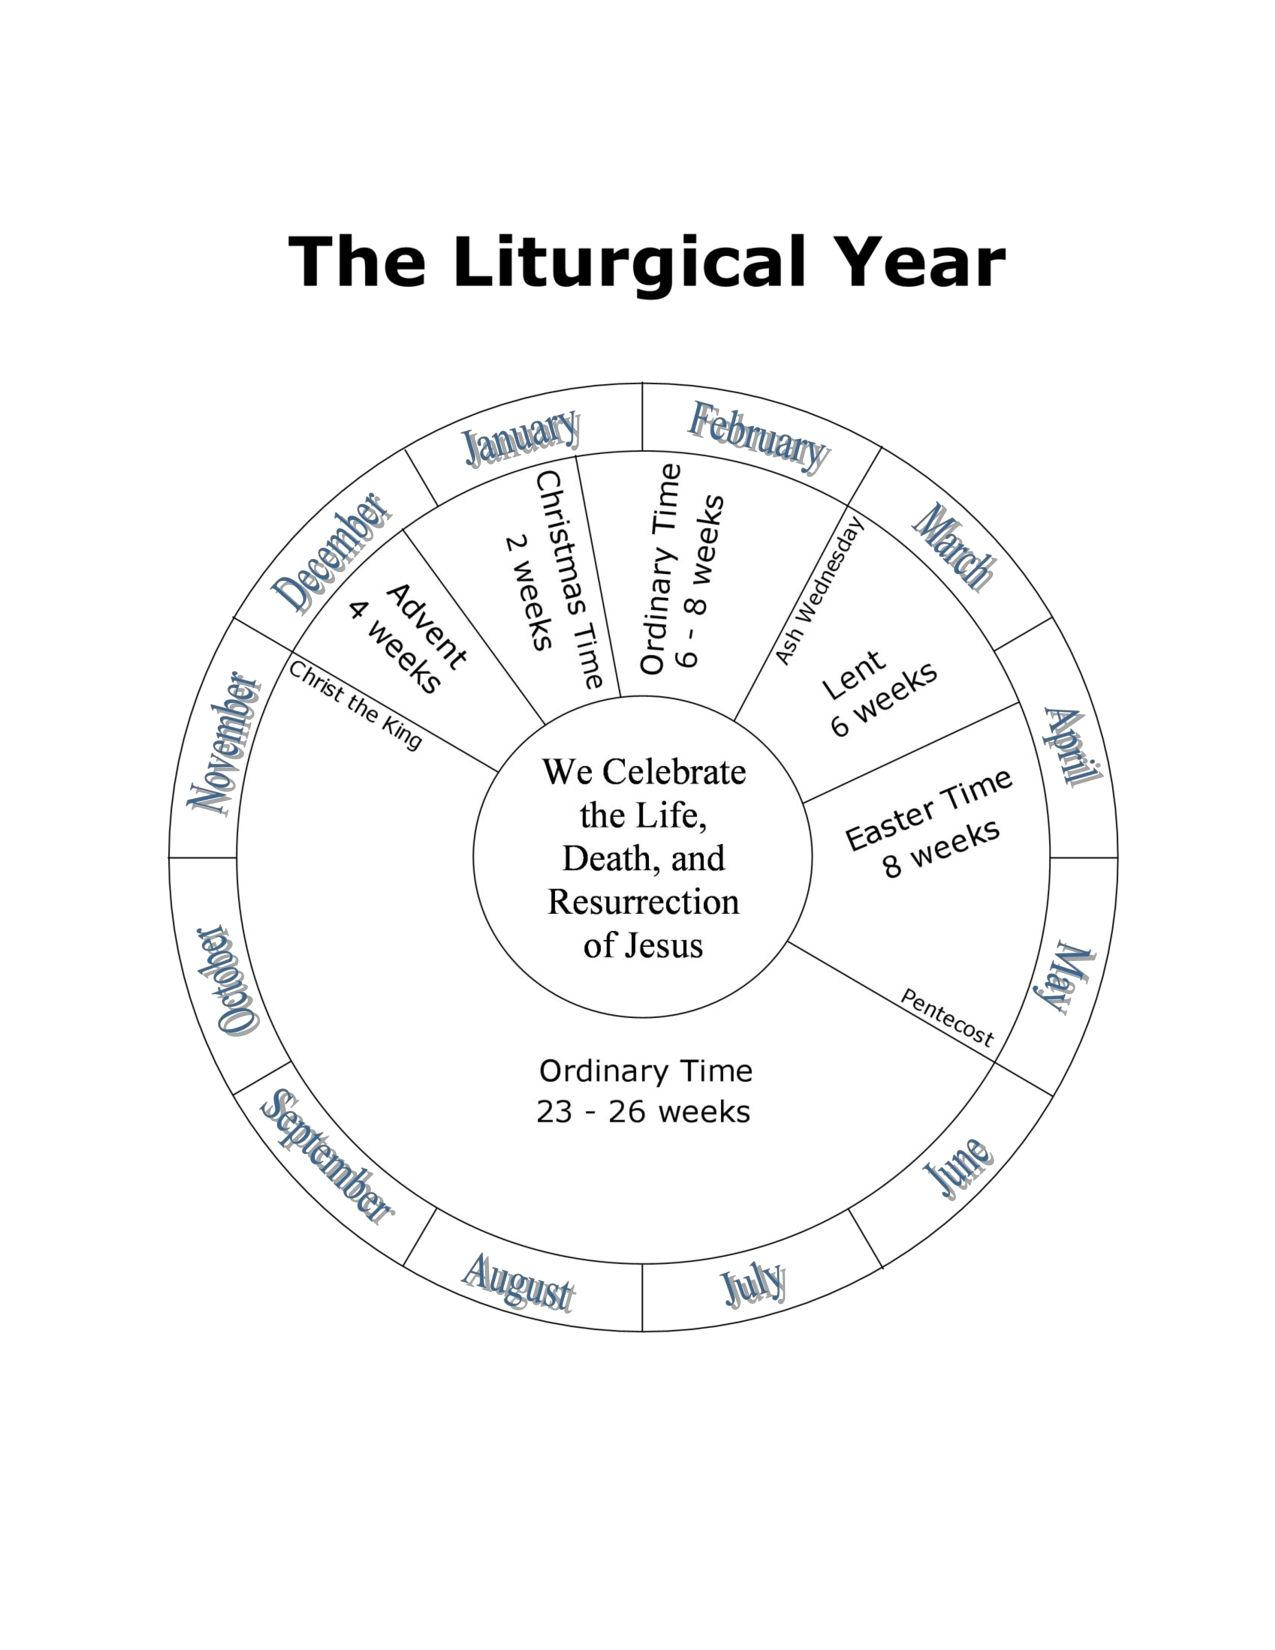 Liturgical Year 2020 Lesson Plan In 2020 Catholic Liturgical Calendar